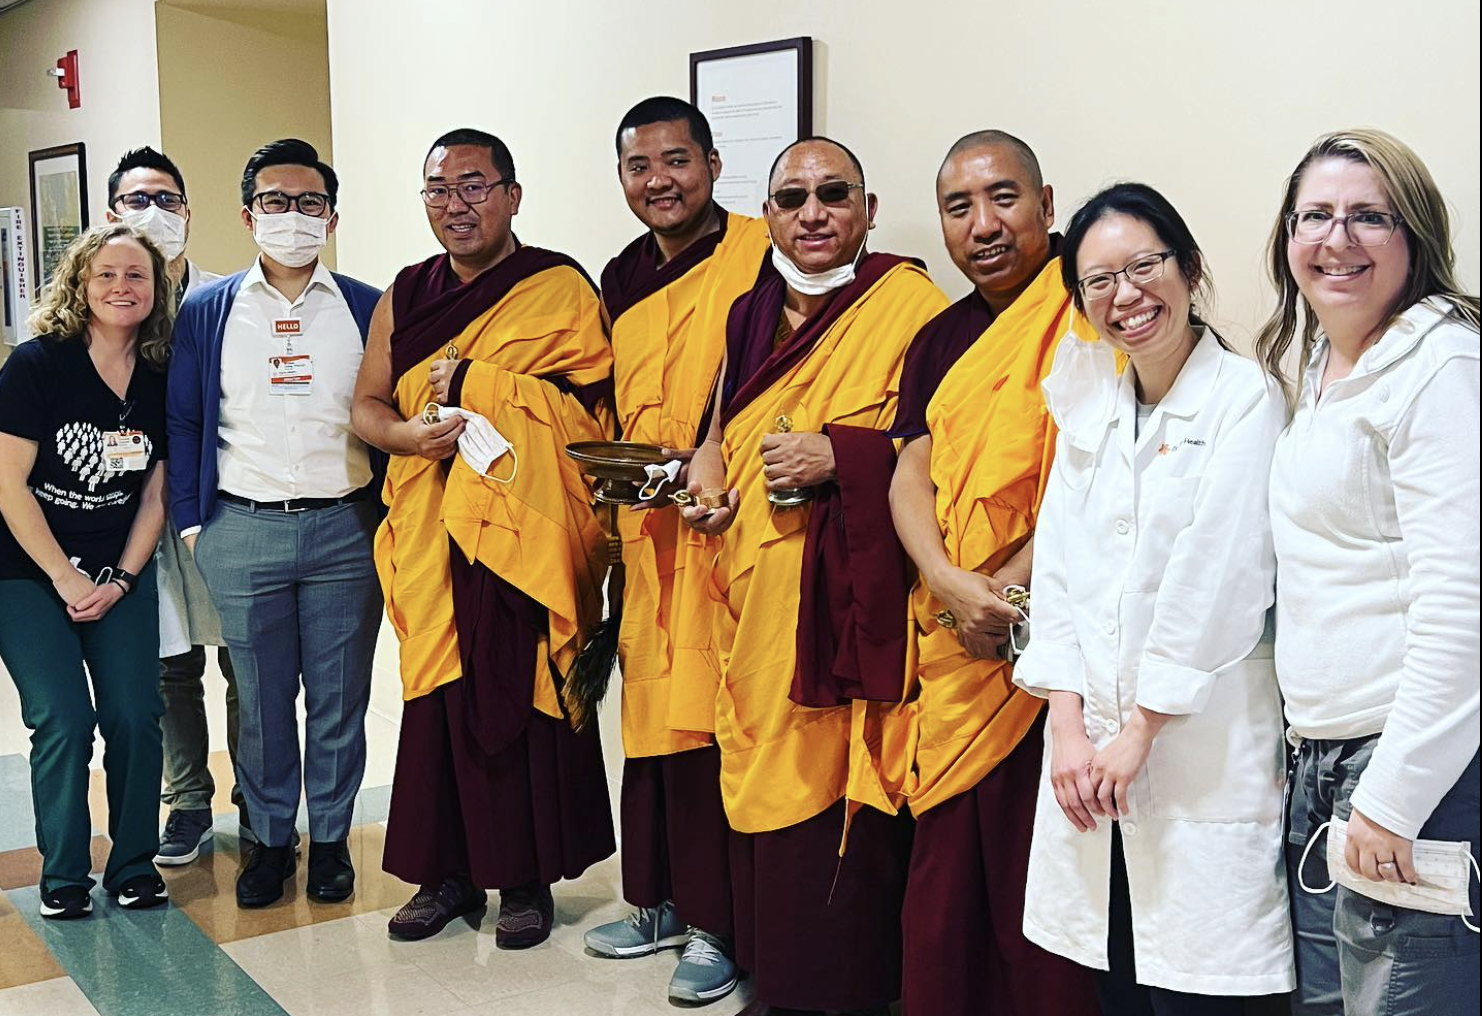 Tibetan Buddhist Monks Tour to visit Mercy Hospital of Folsom